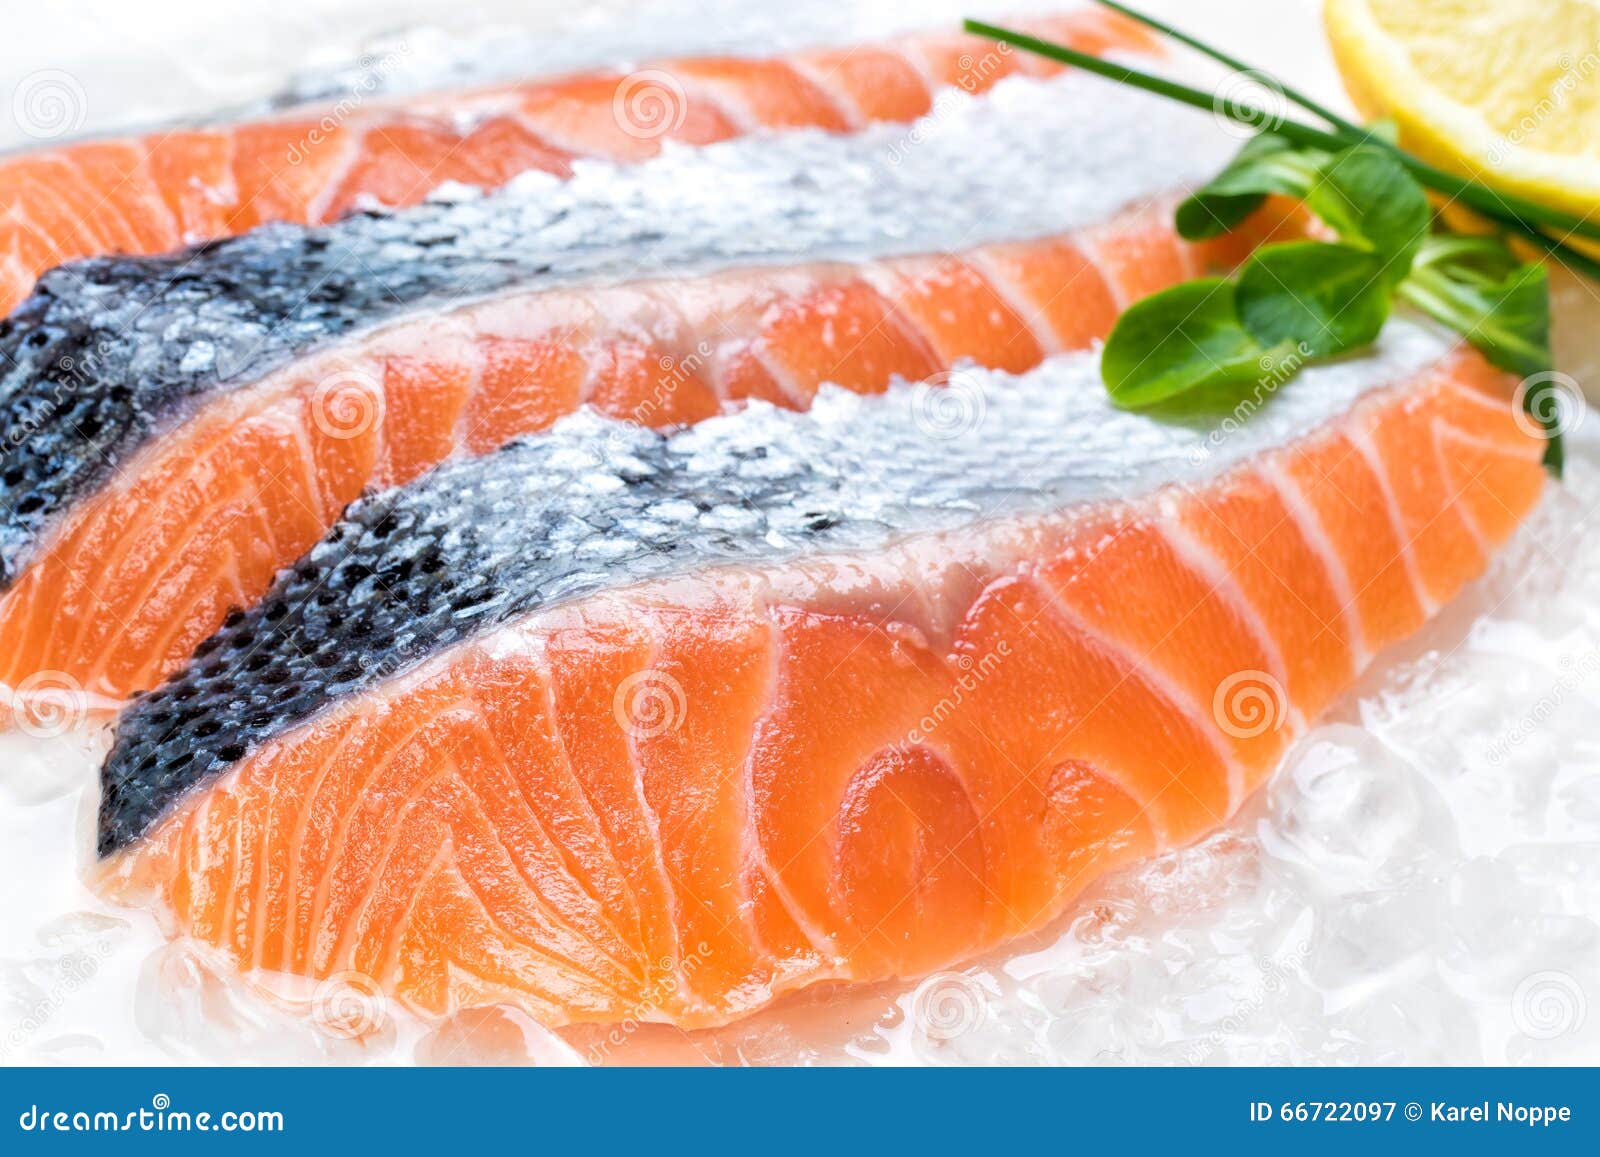 fresh sliced salmon portions on ice.